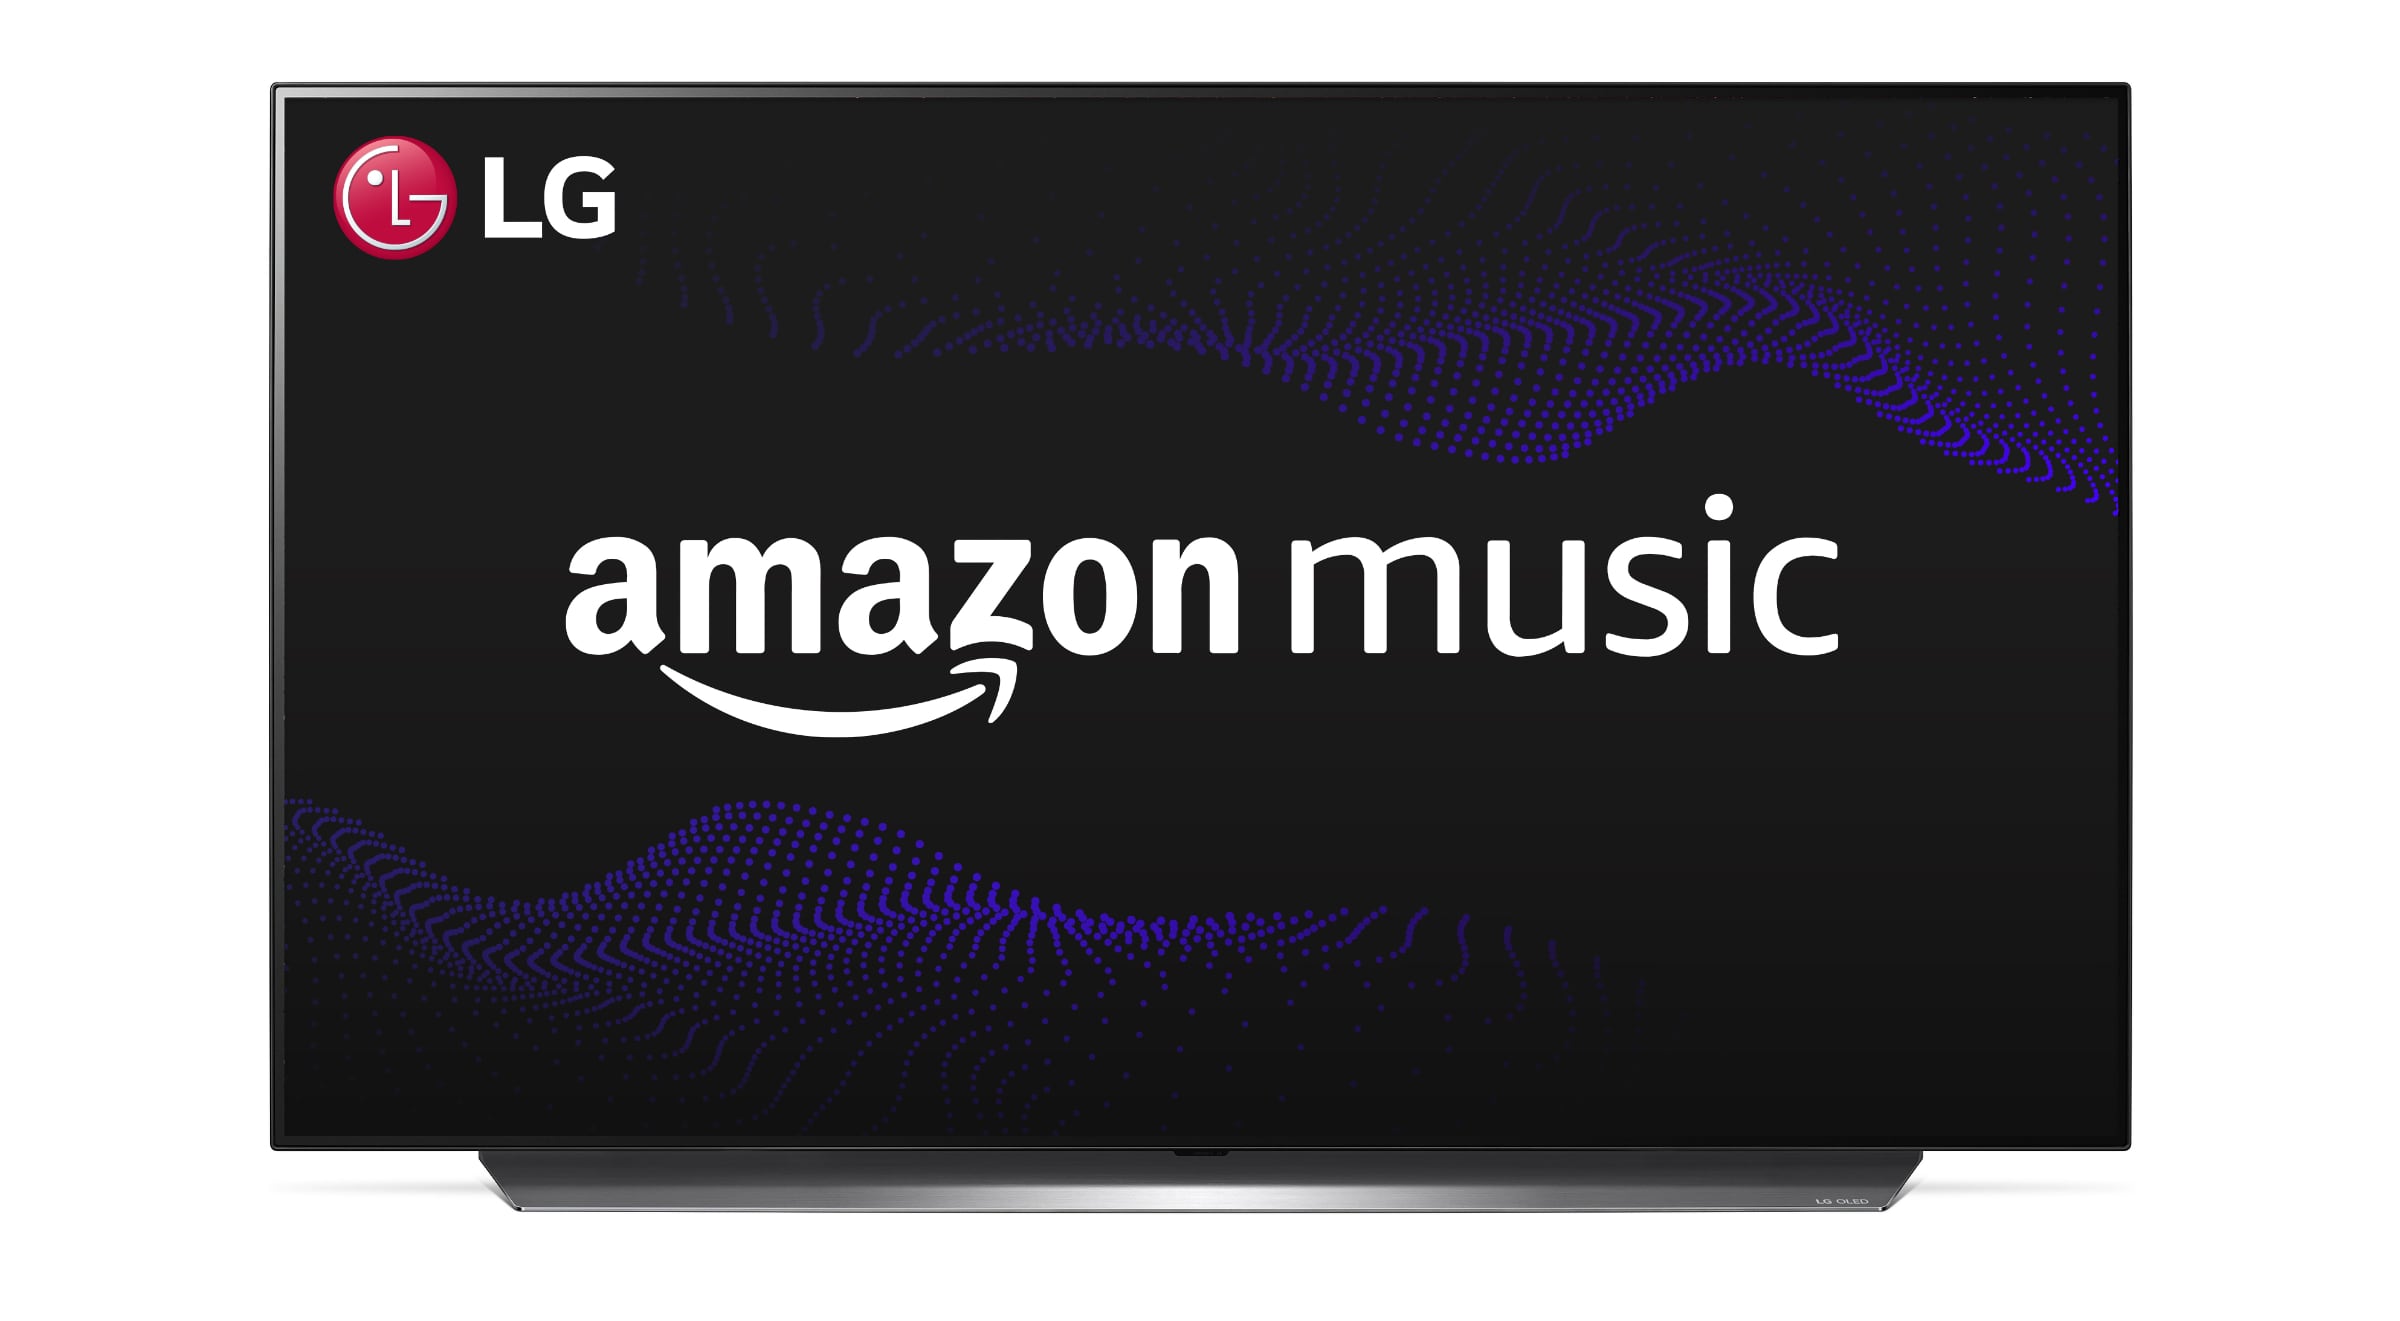 Amazon Music LG